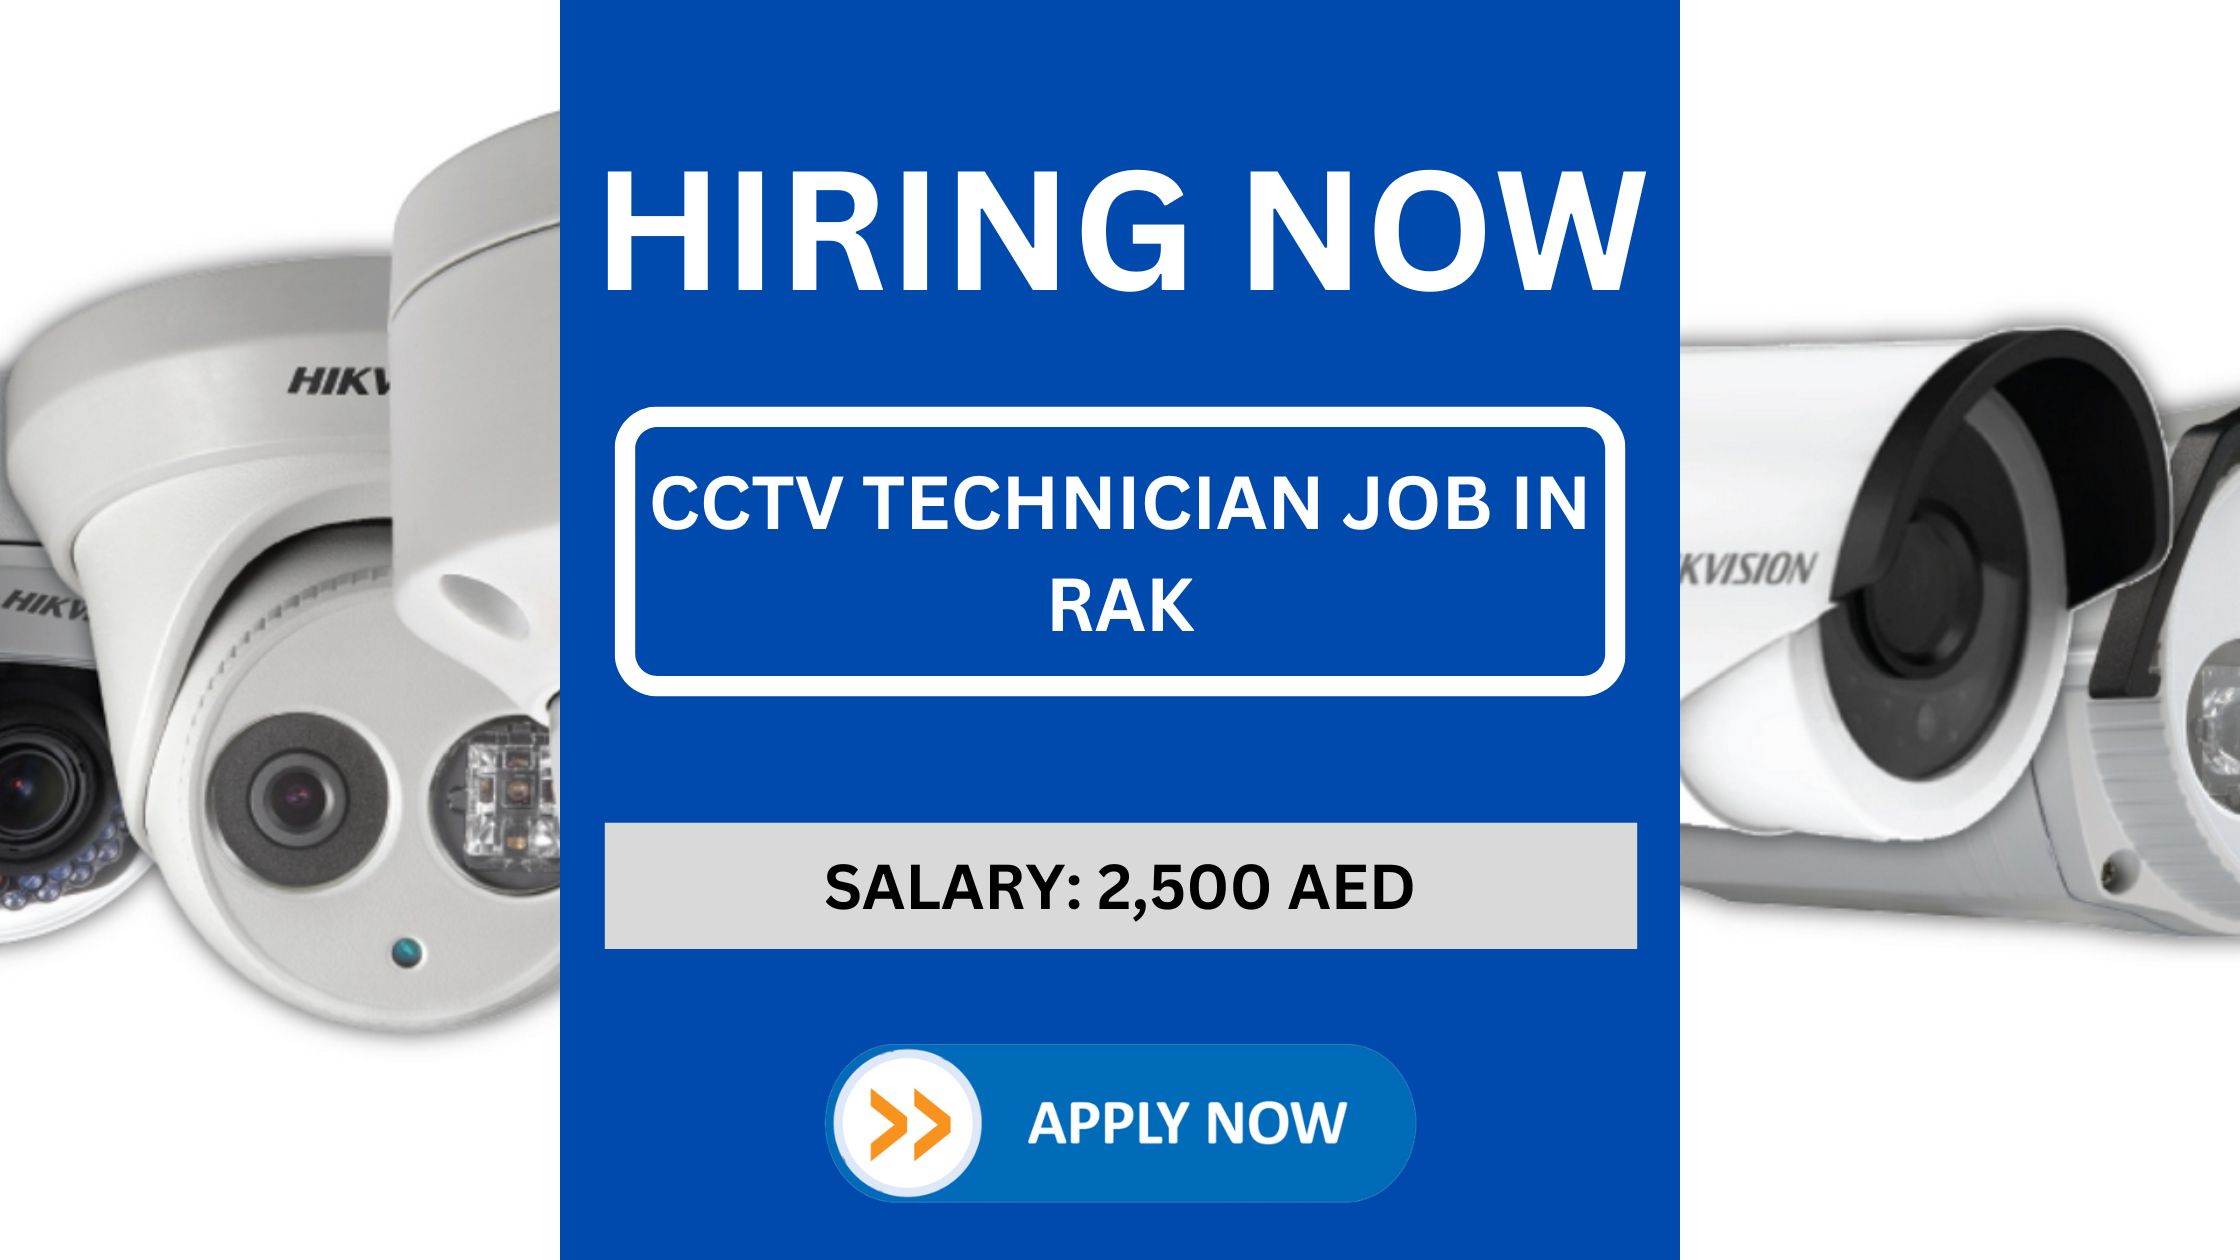 Position: CCTV Technician | Salary: 2,500 AED